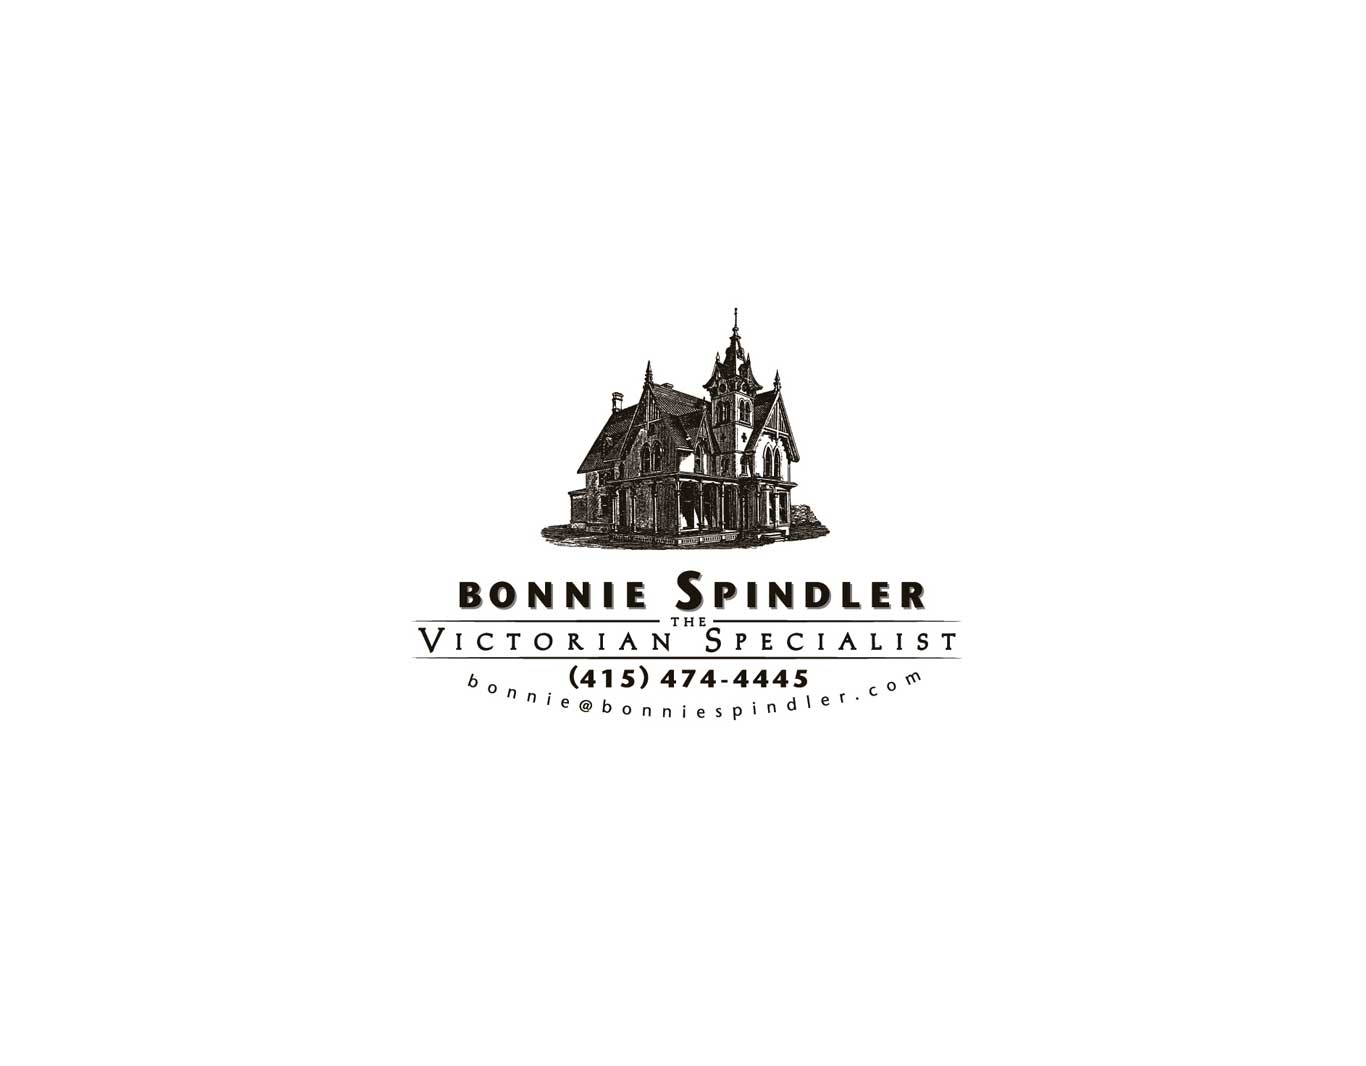 Campaign- Bonnie Spindler